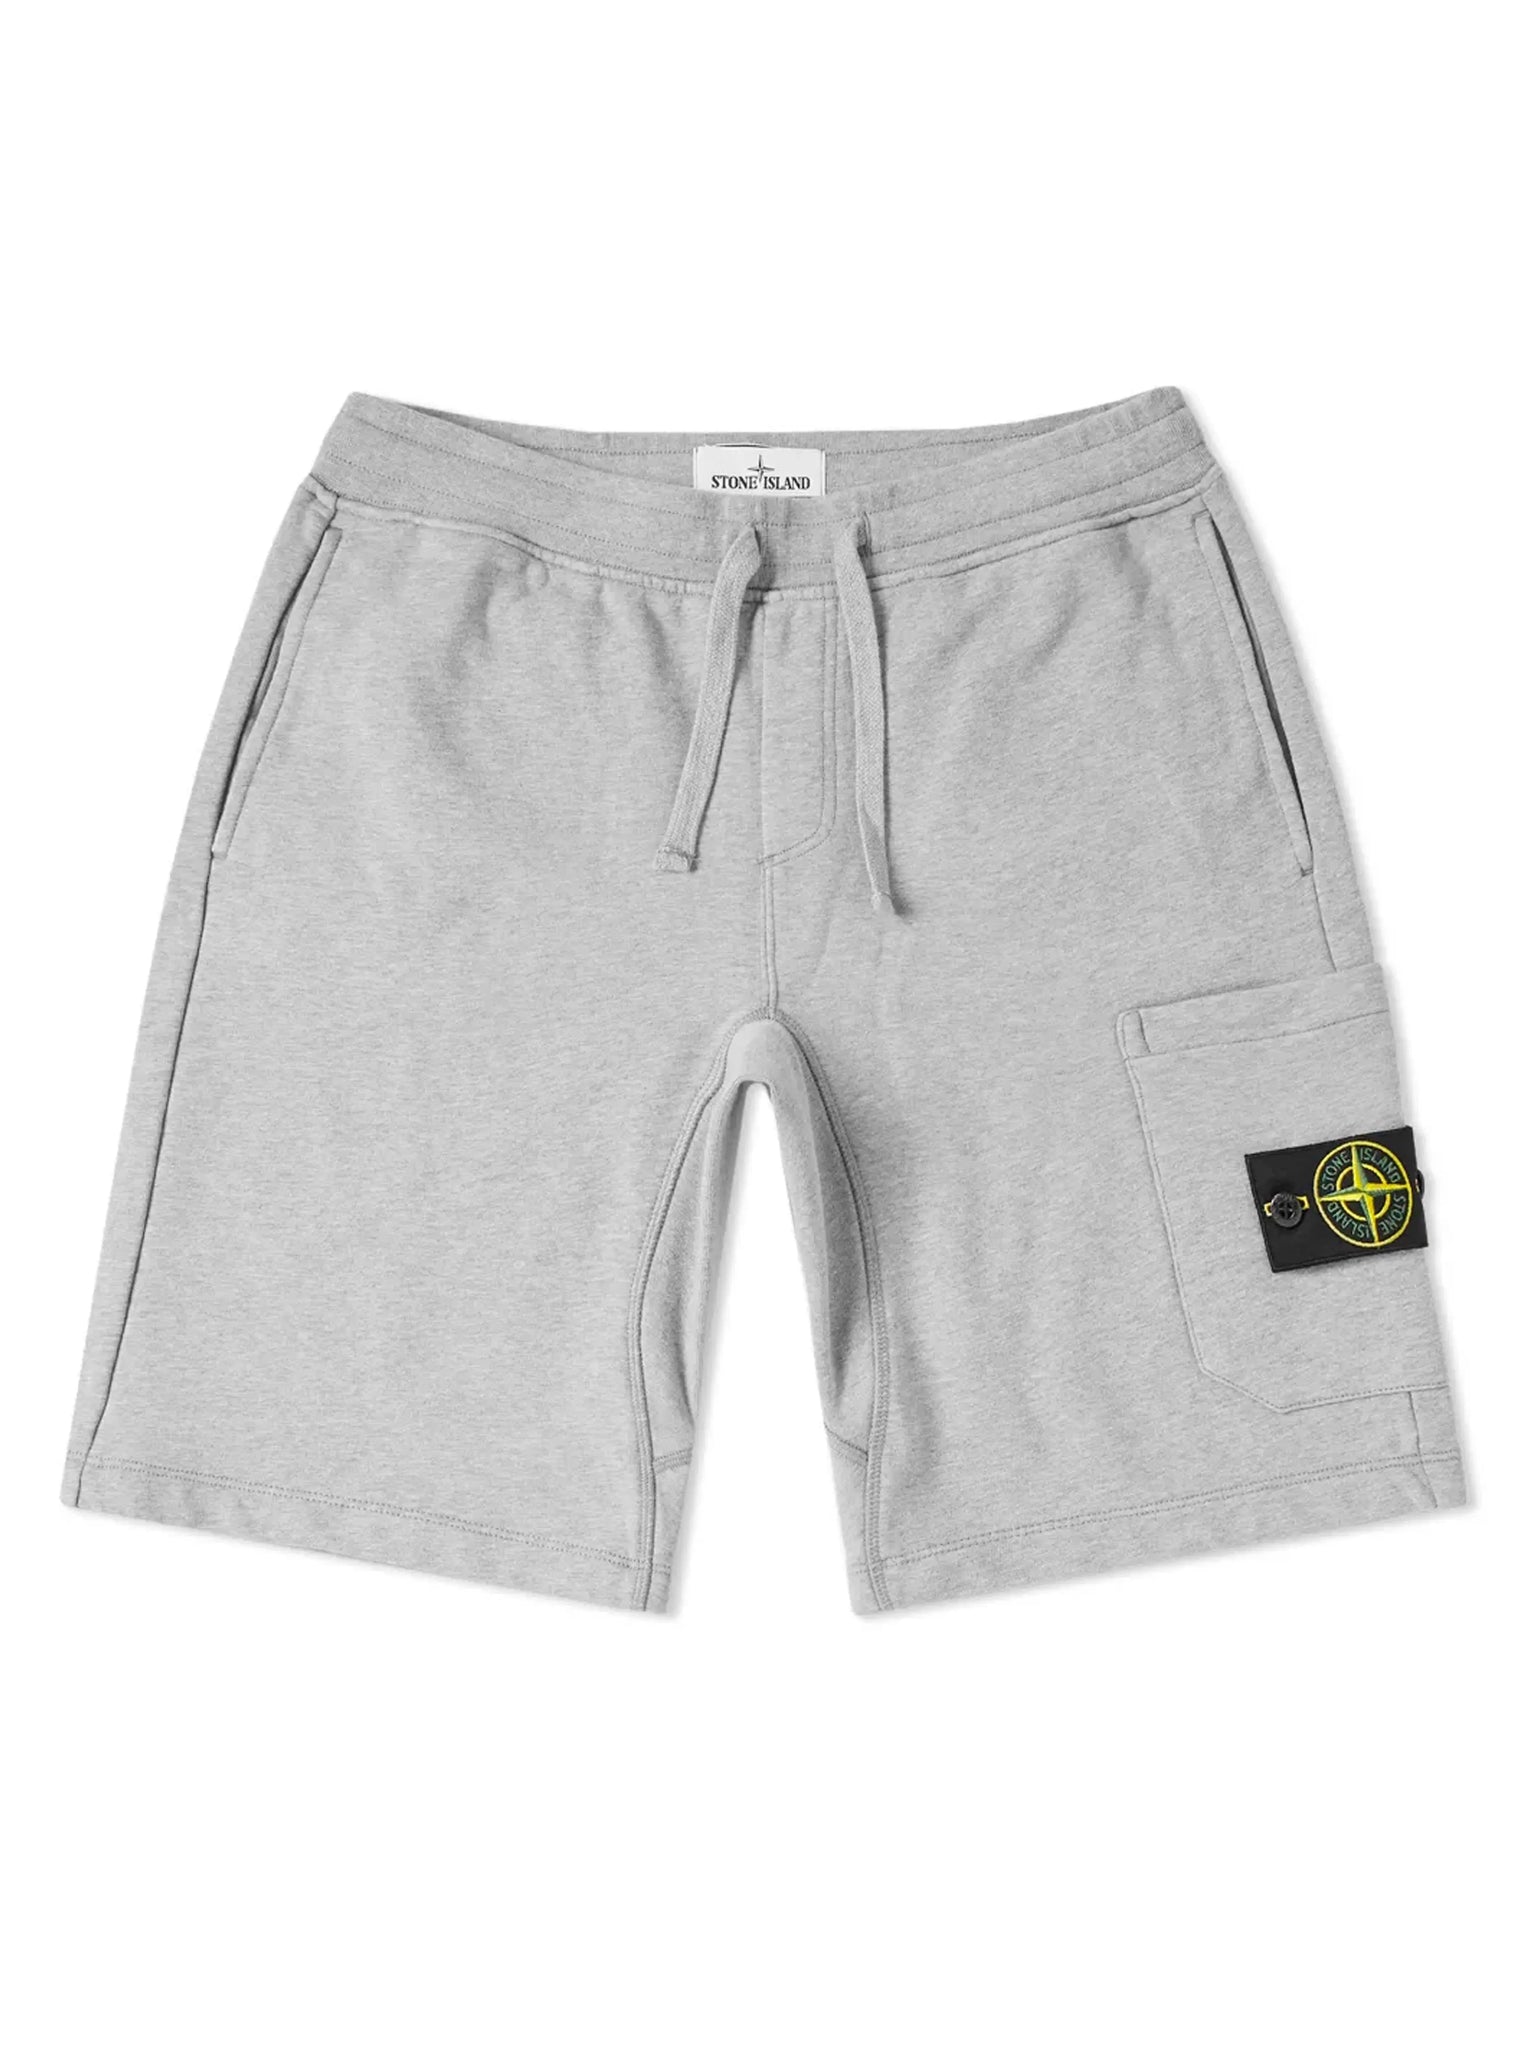 Stone Island Pocket Sweat Shorts Grey Prior